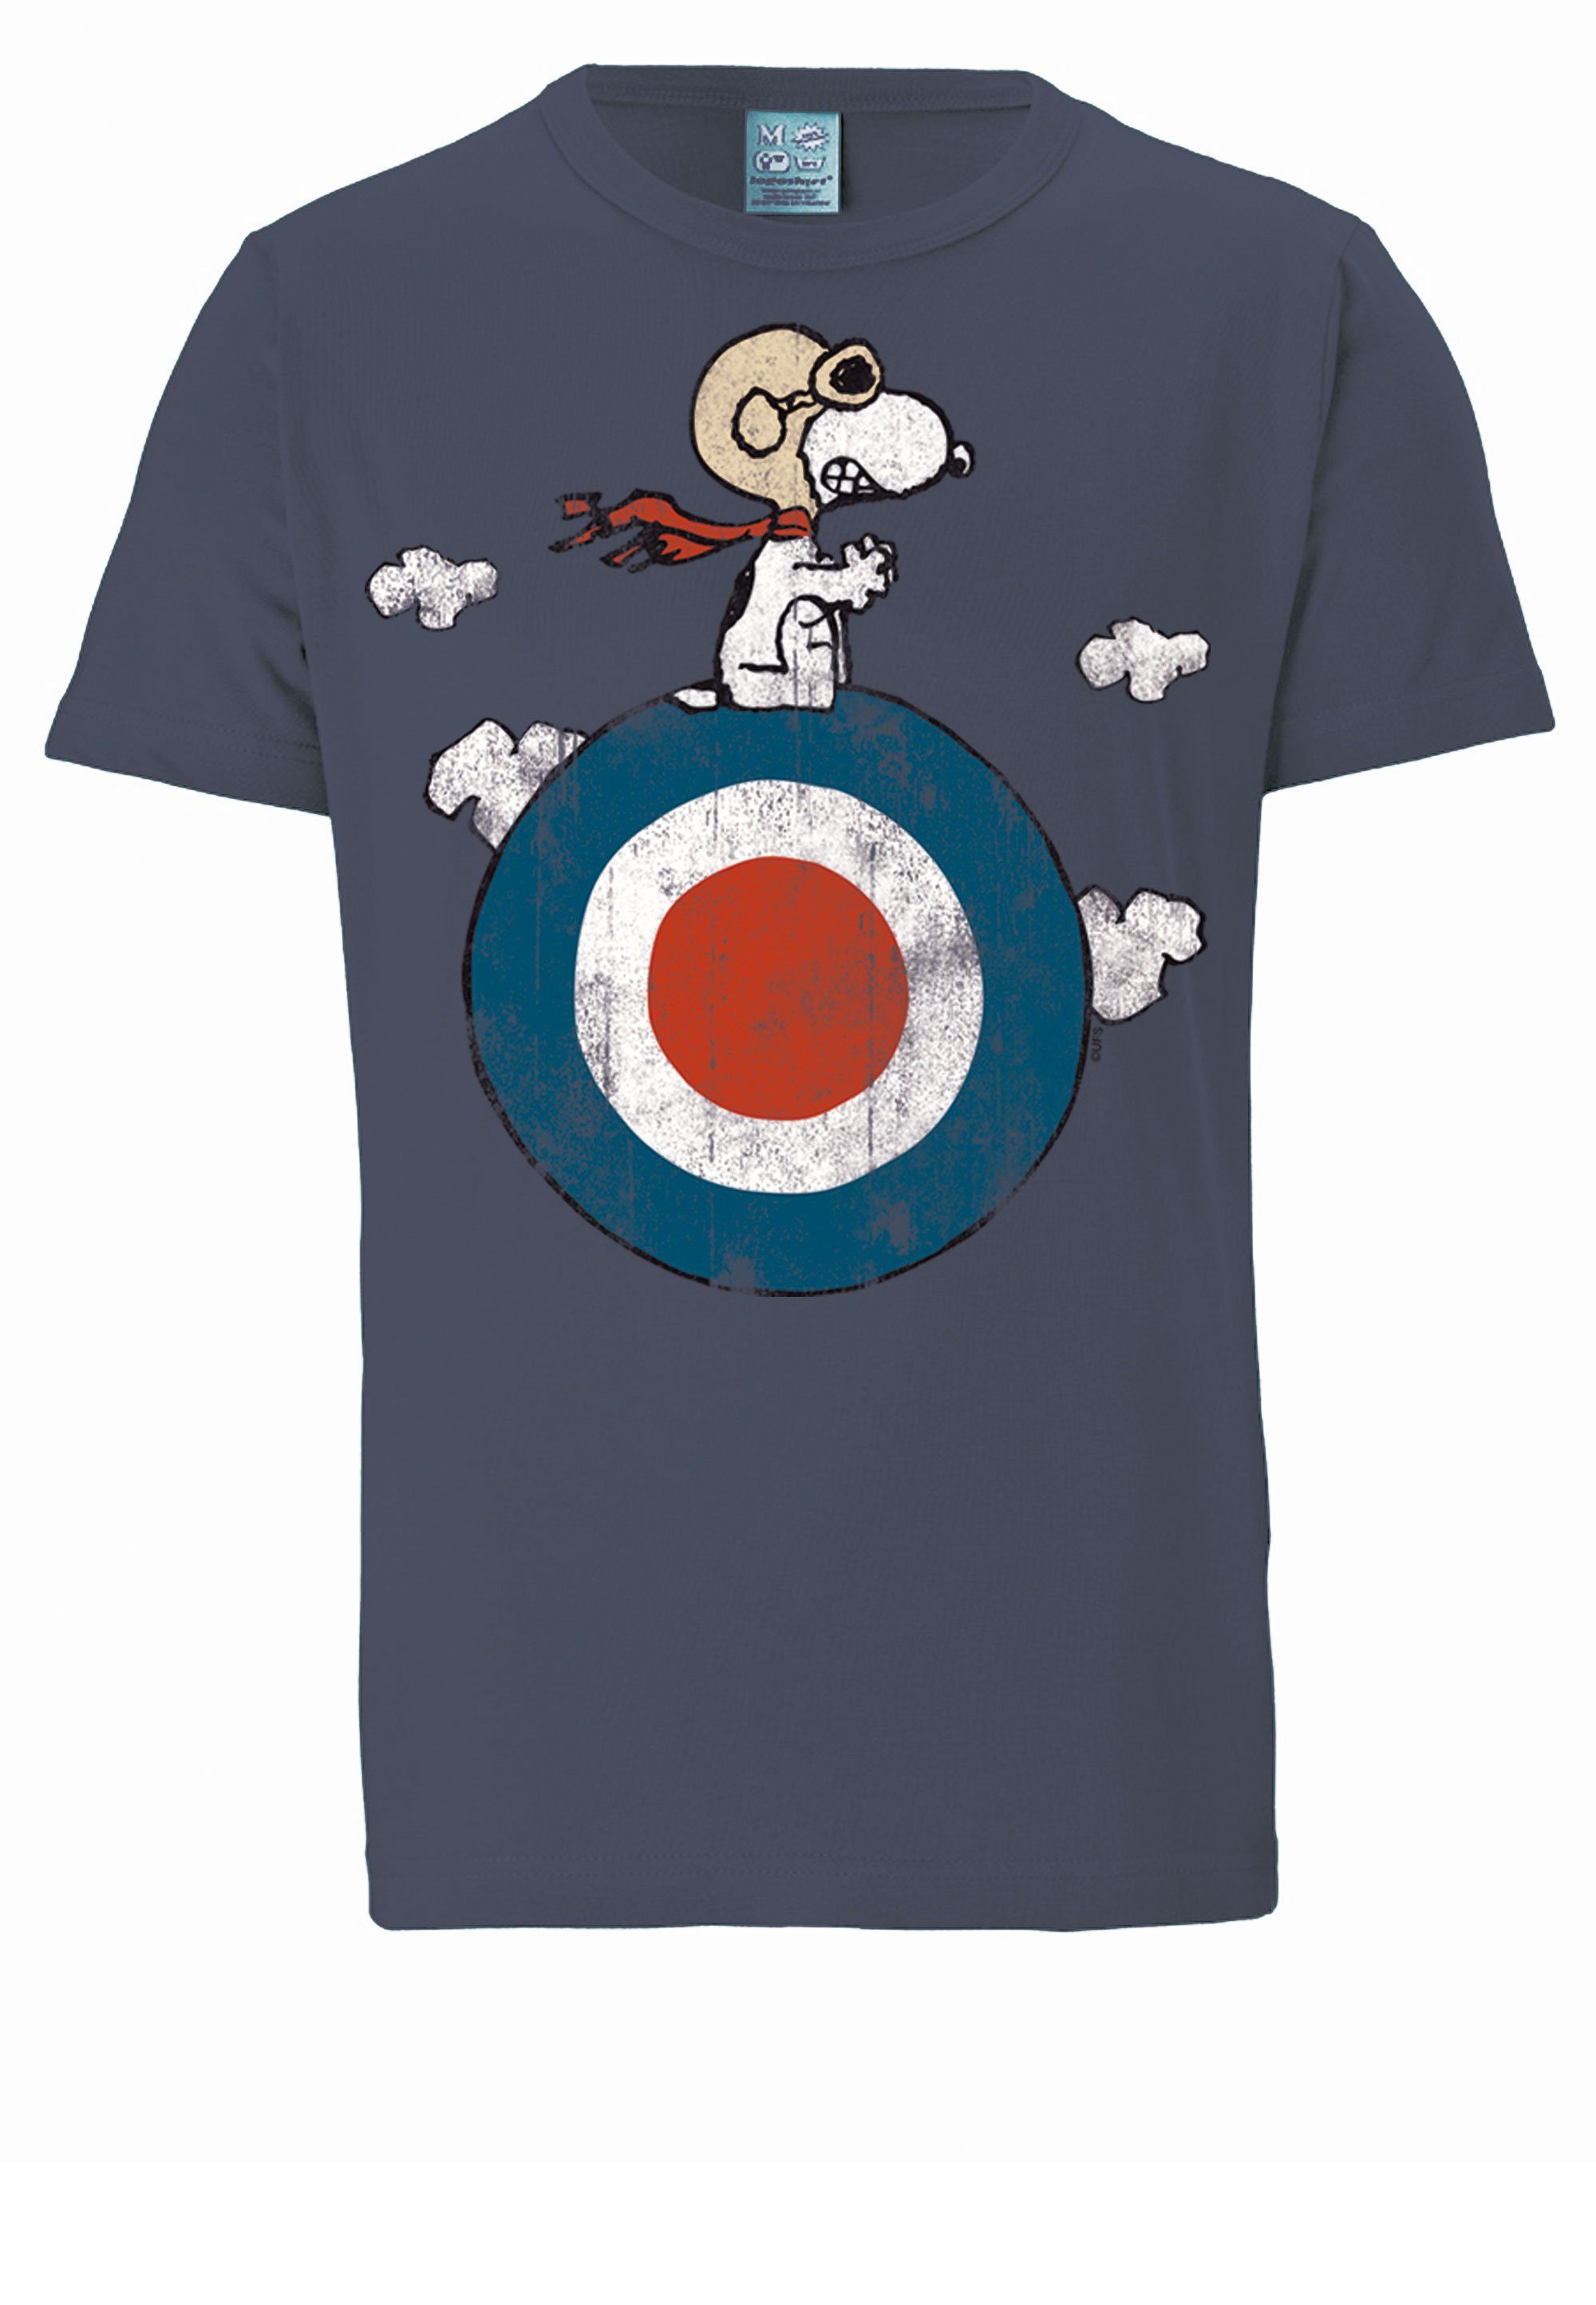 LOGOSHIRT T-Shirt Peanuts - Snoopy blau-grau Print lizenziertem mit